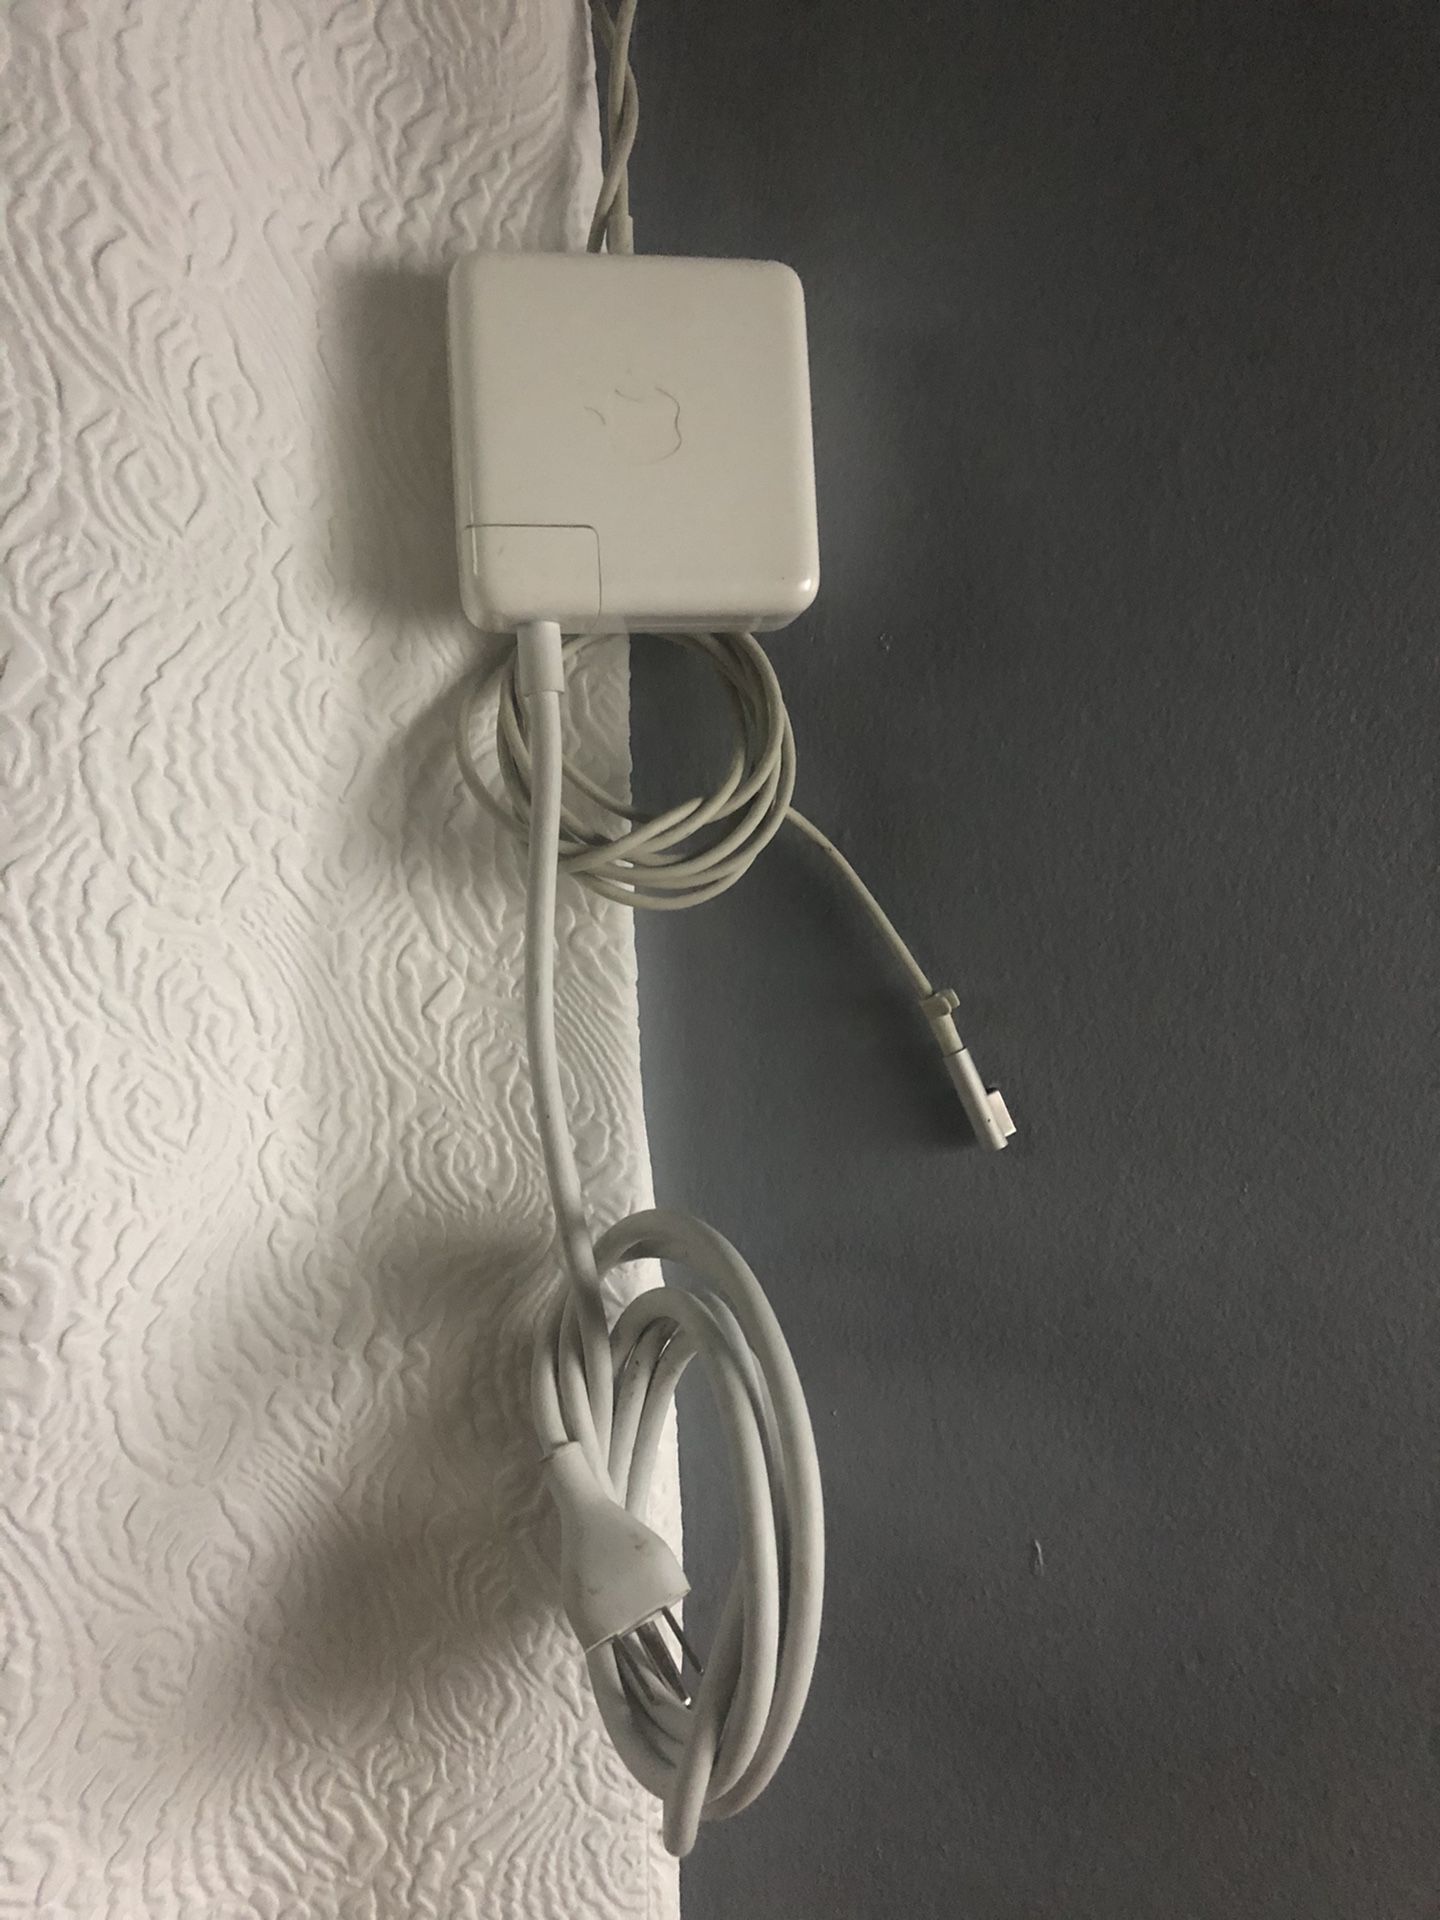 Power Adapter For Macbook